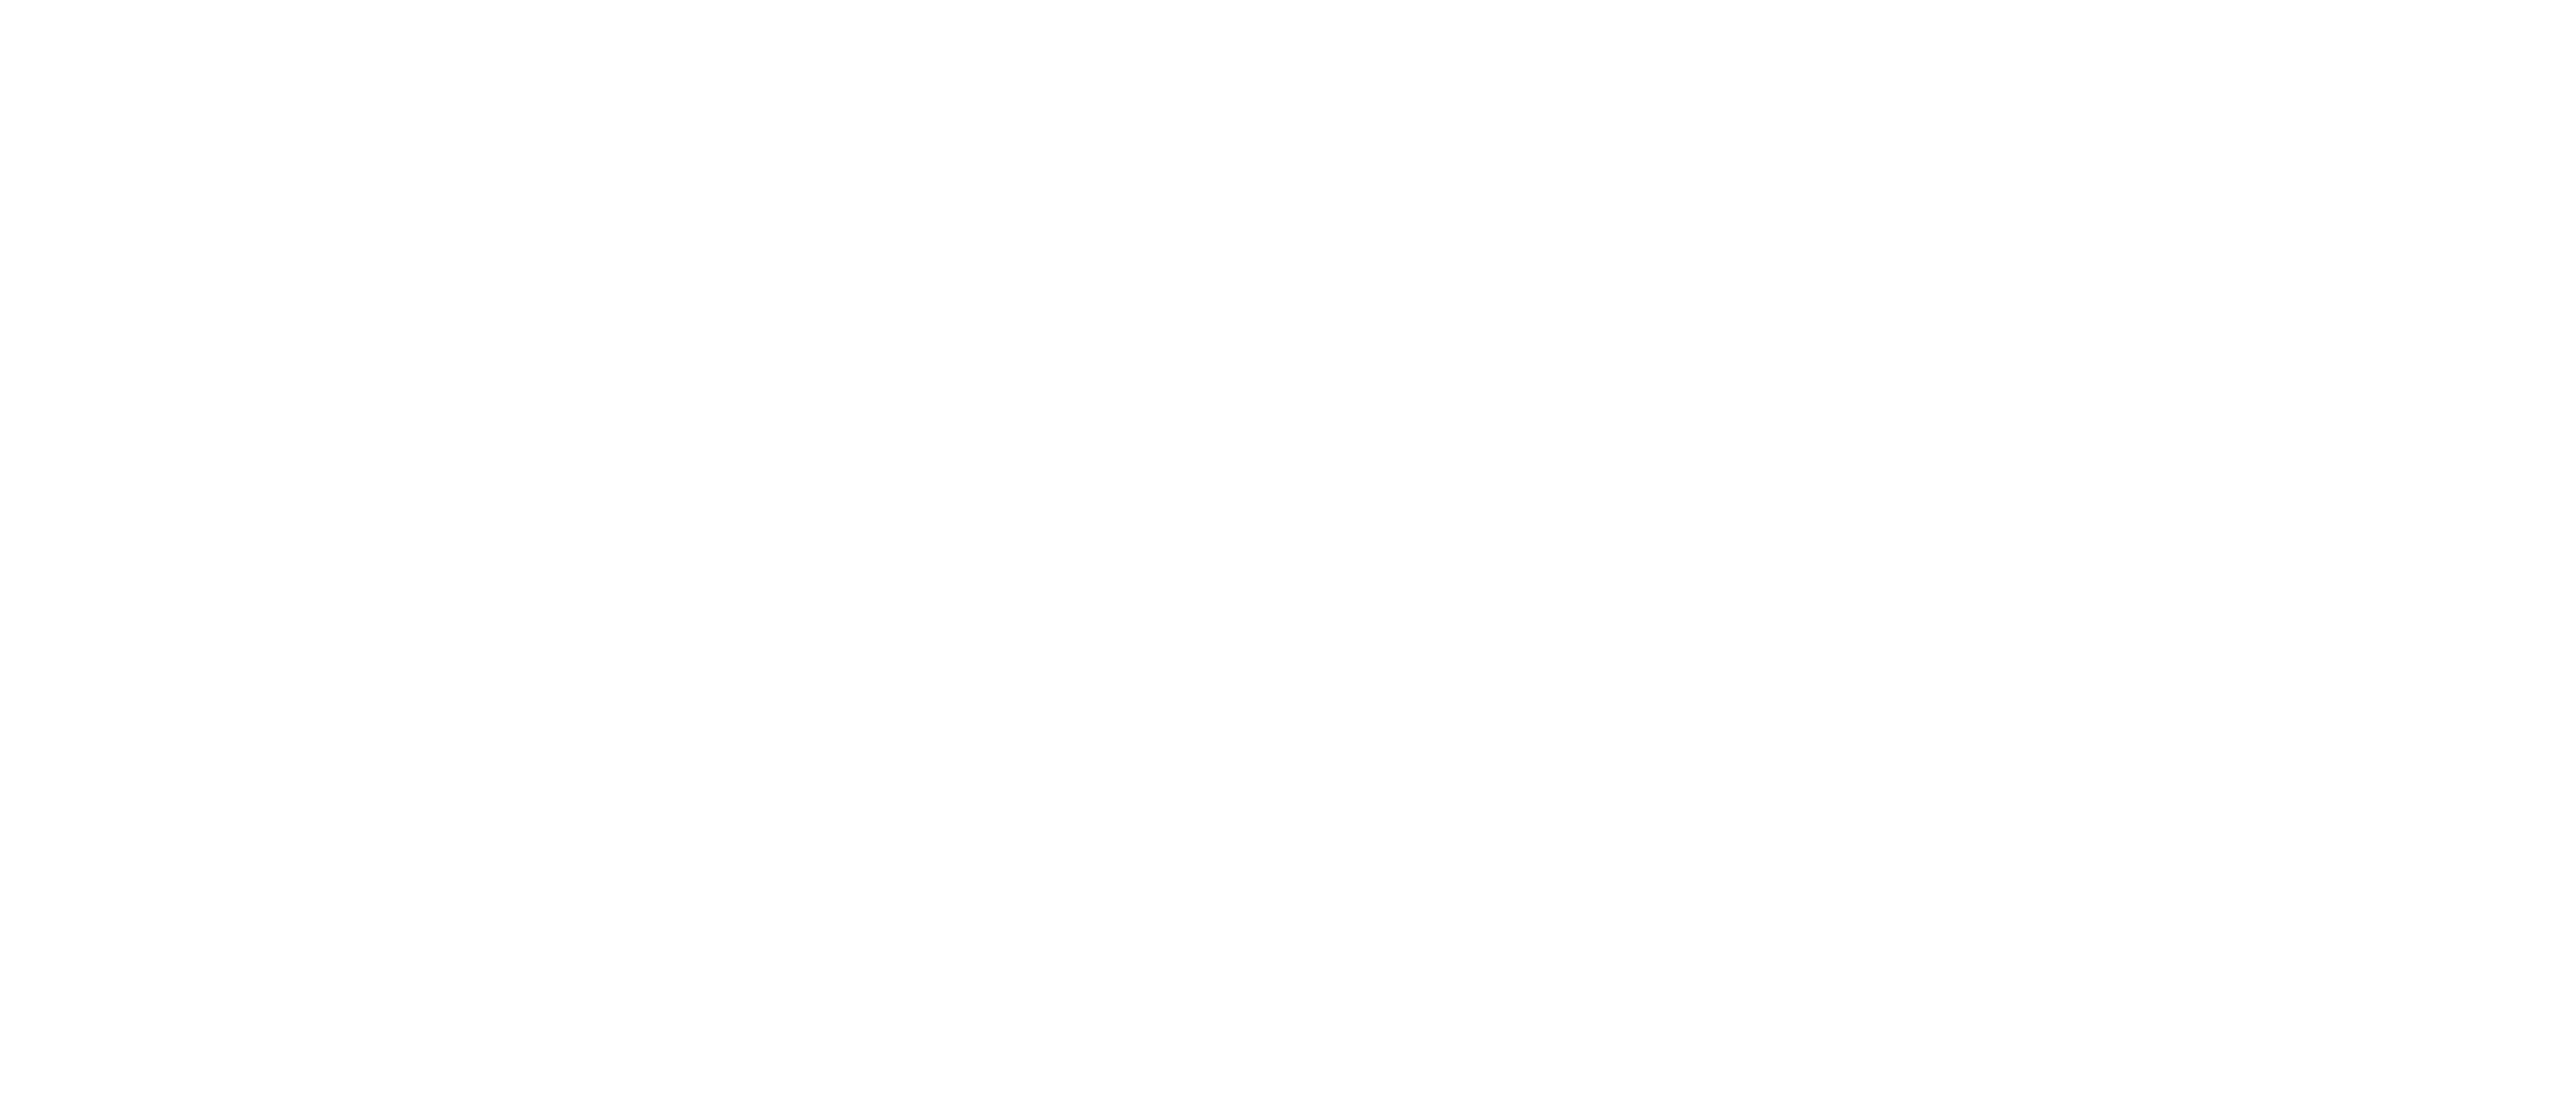 Boris Doye